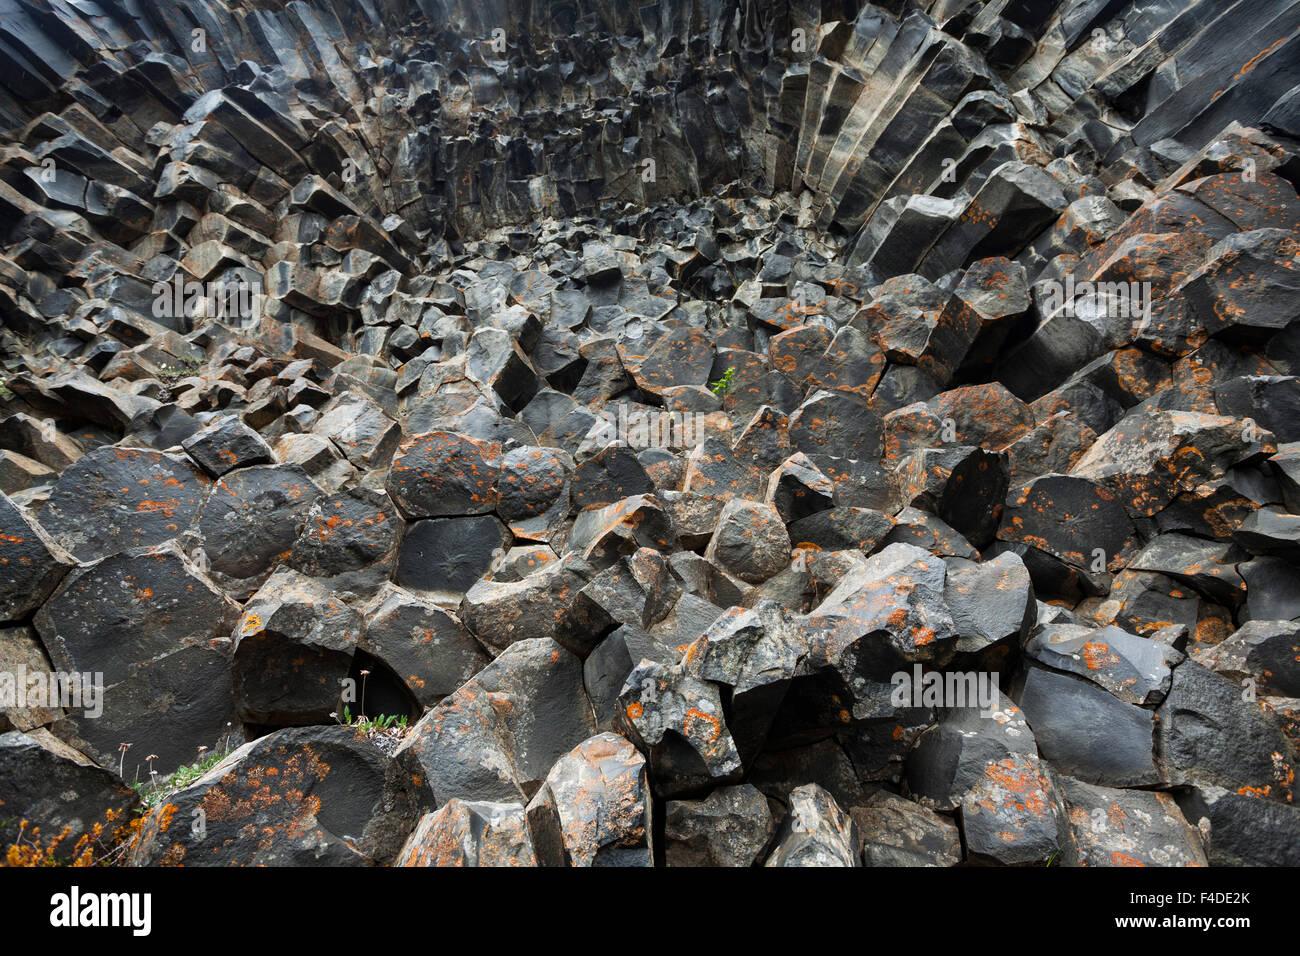 Natürlichen Muster der Basaltfelsen am Hljodaklettar, Jokulsargljufur, Nordhurland Eystra, Island. Stockfoto